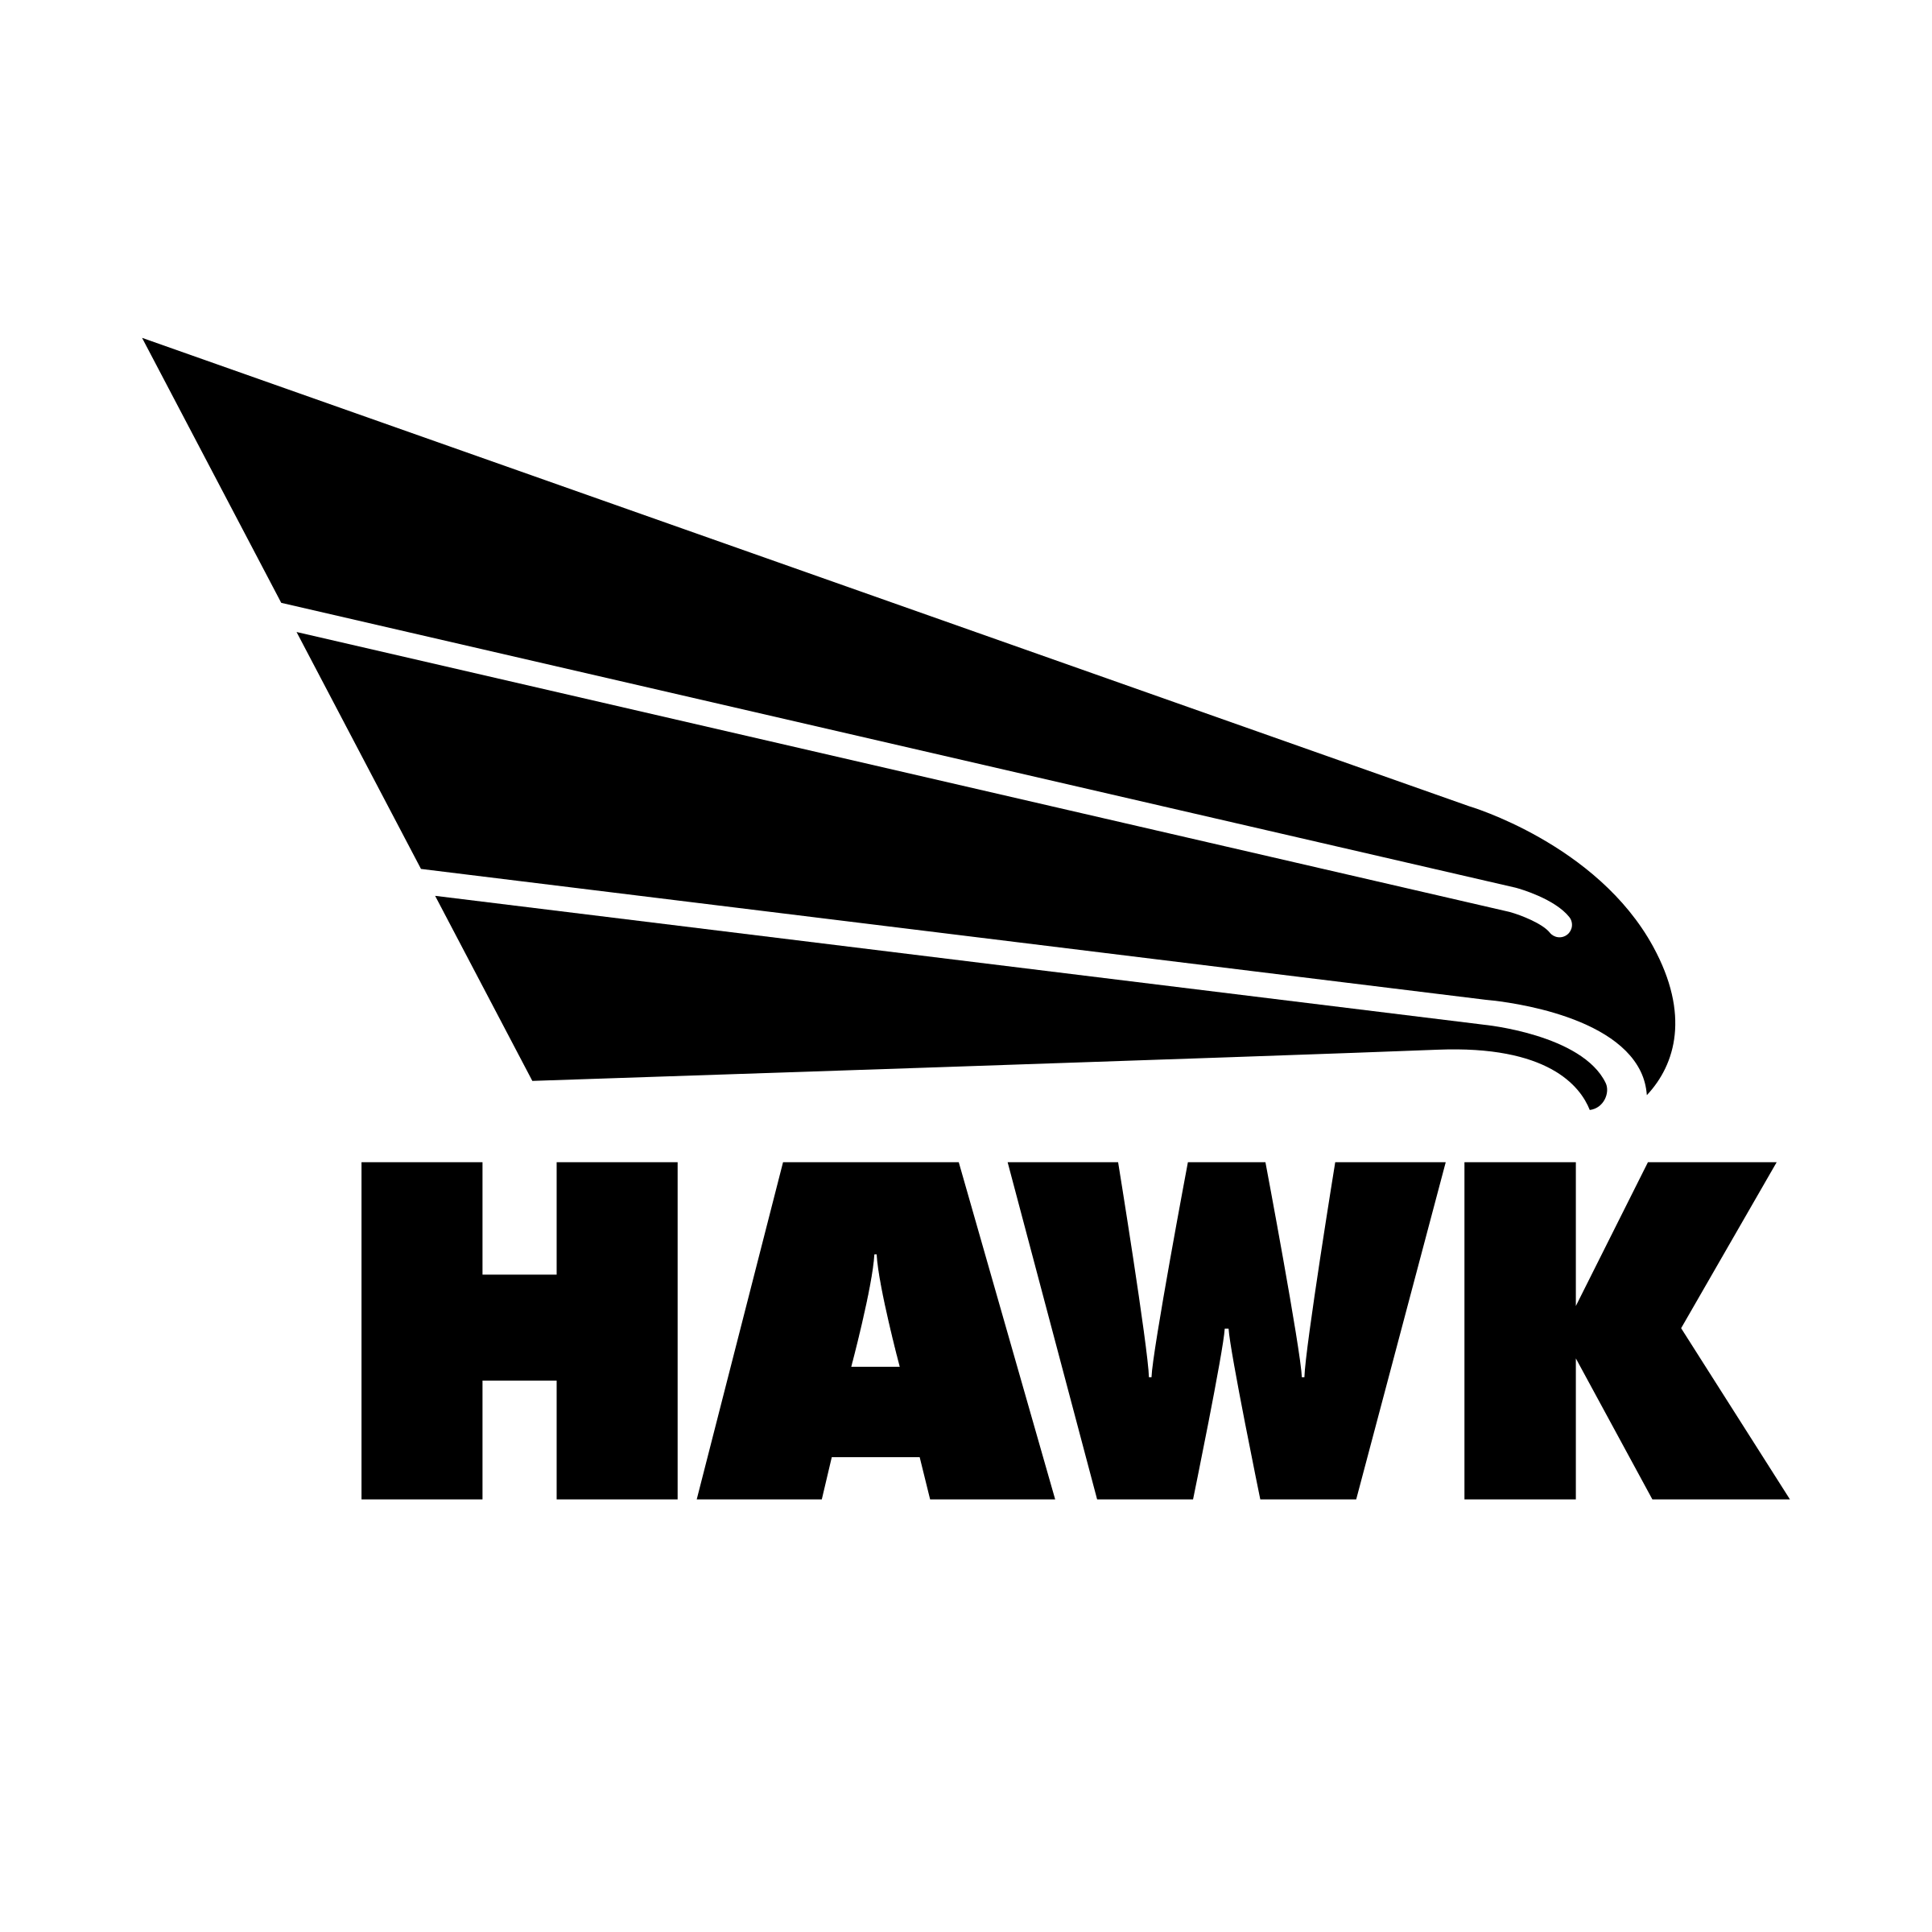 Hawk Logo - Hawk Logo PNG Transparent & SVG Vector - Freebie Supply